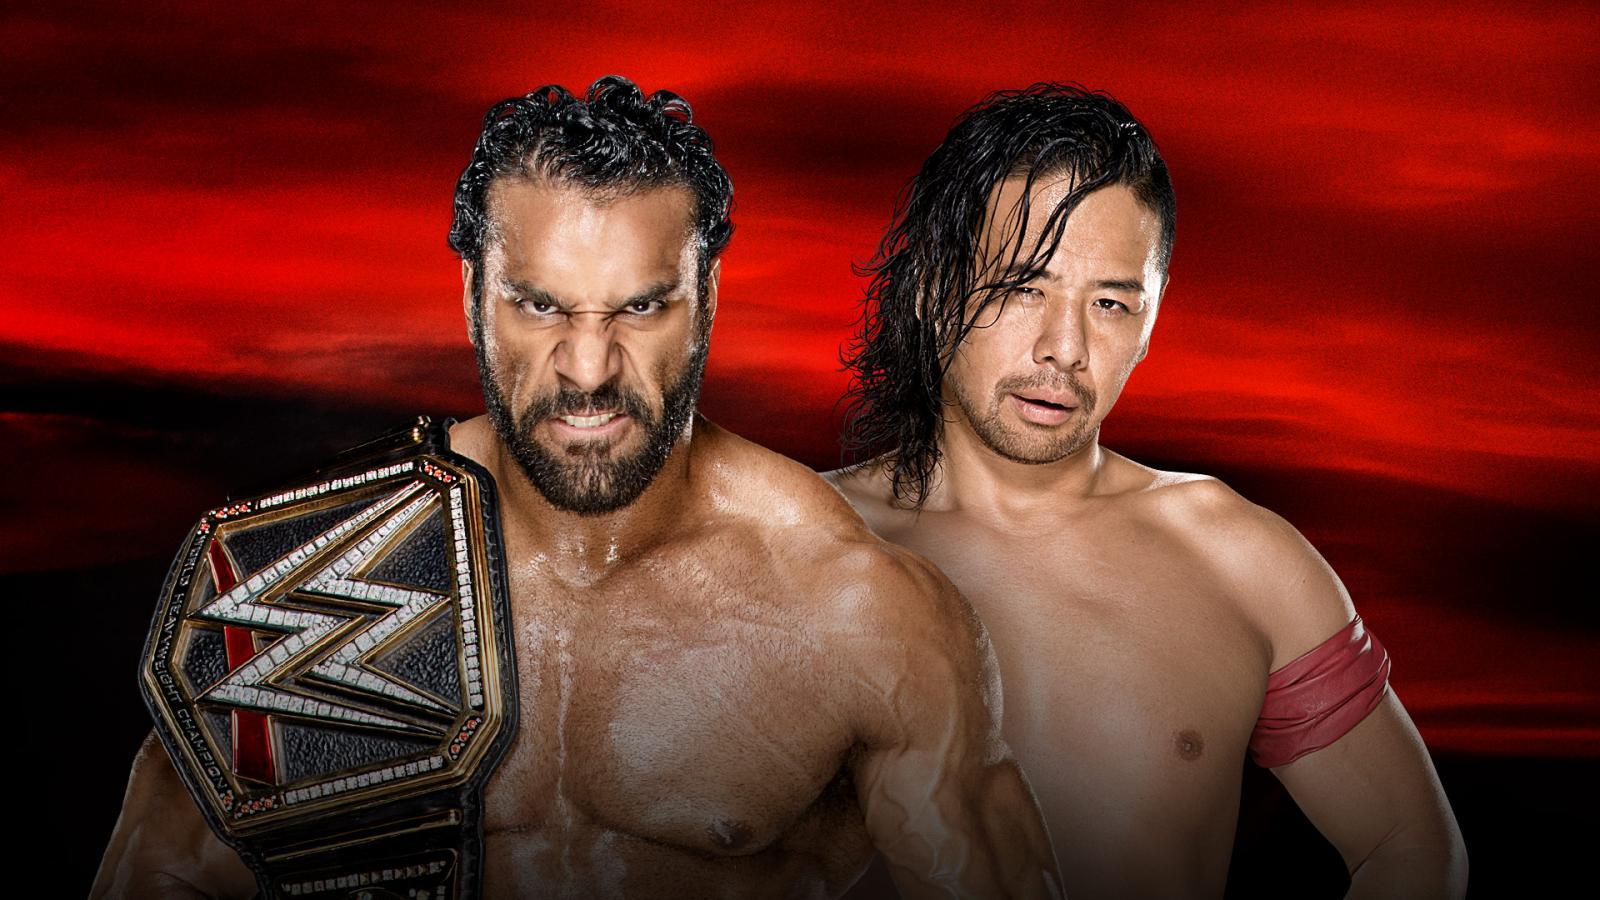 Jinder Mahal vs. Shinsuke Nakamura official for WWE Hell in a Cell